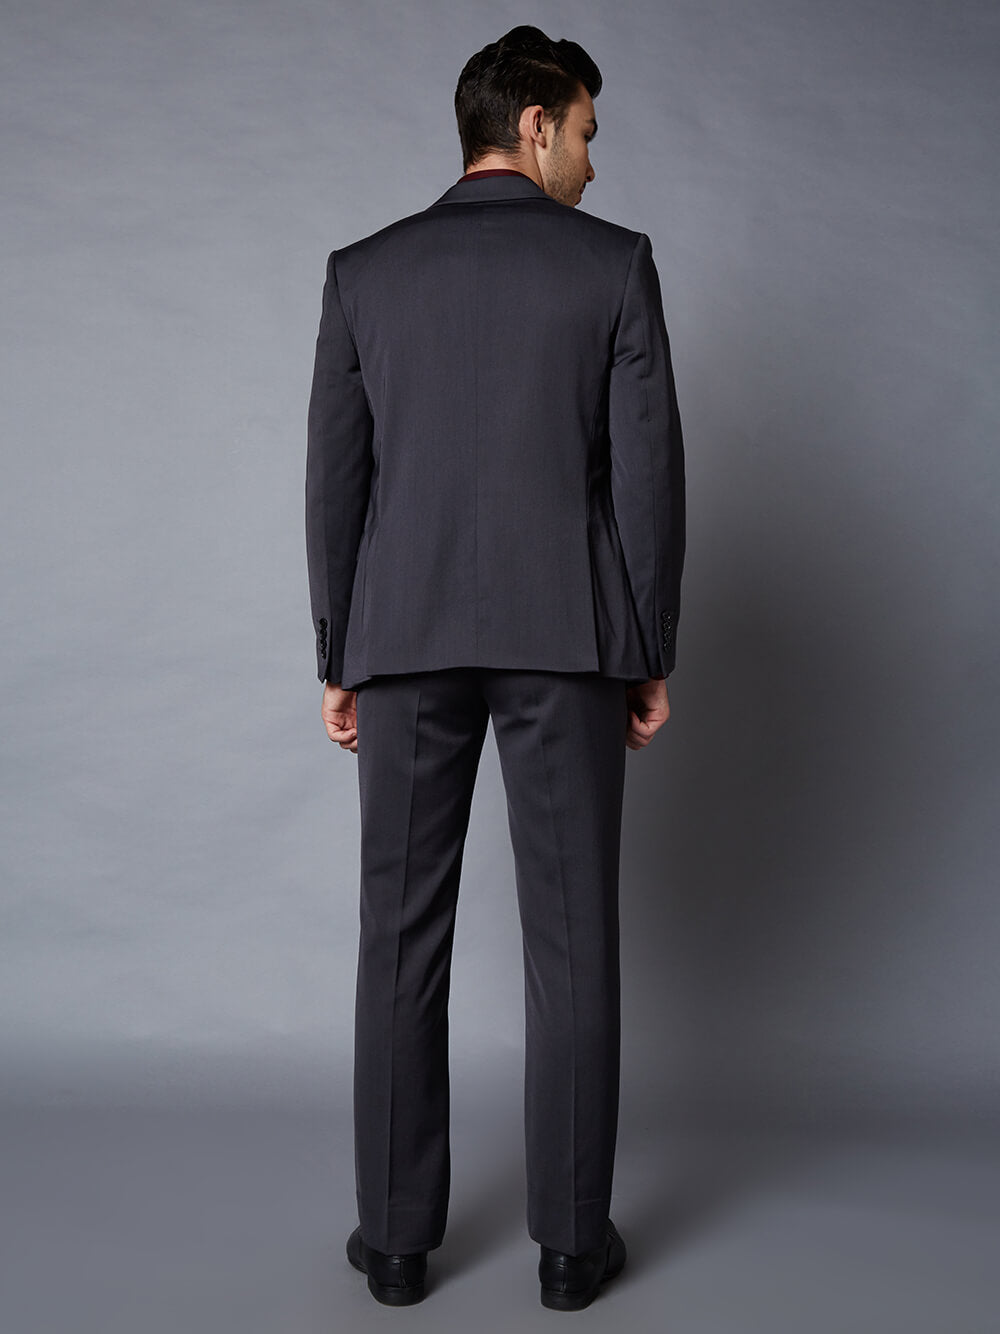 Portofino charcoal grey 2 piece suit